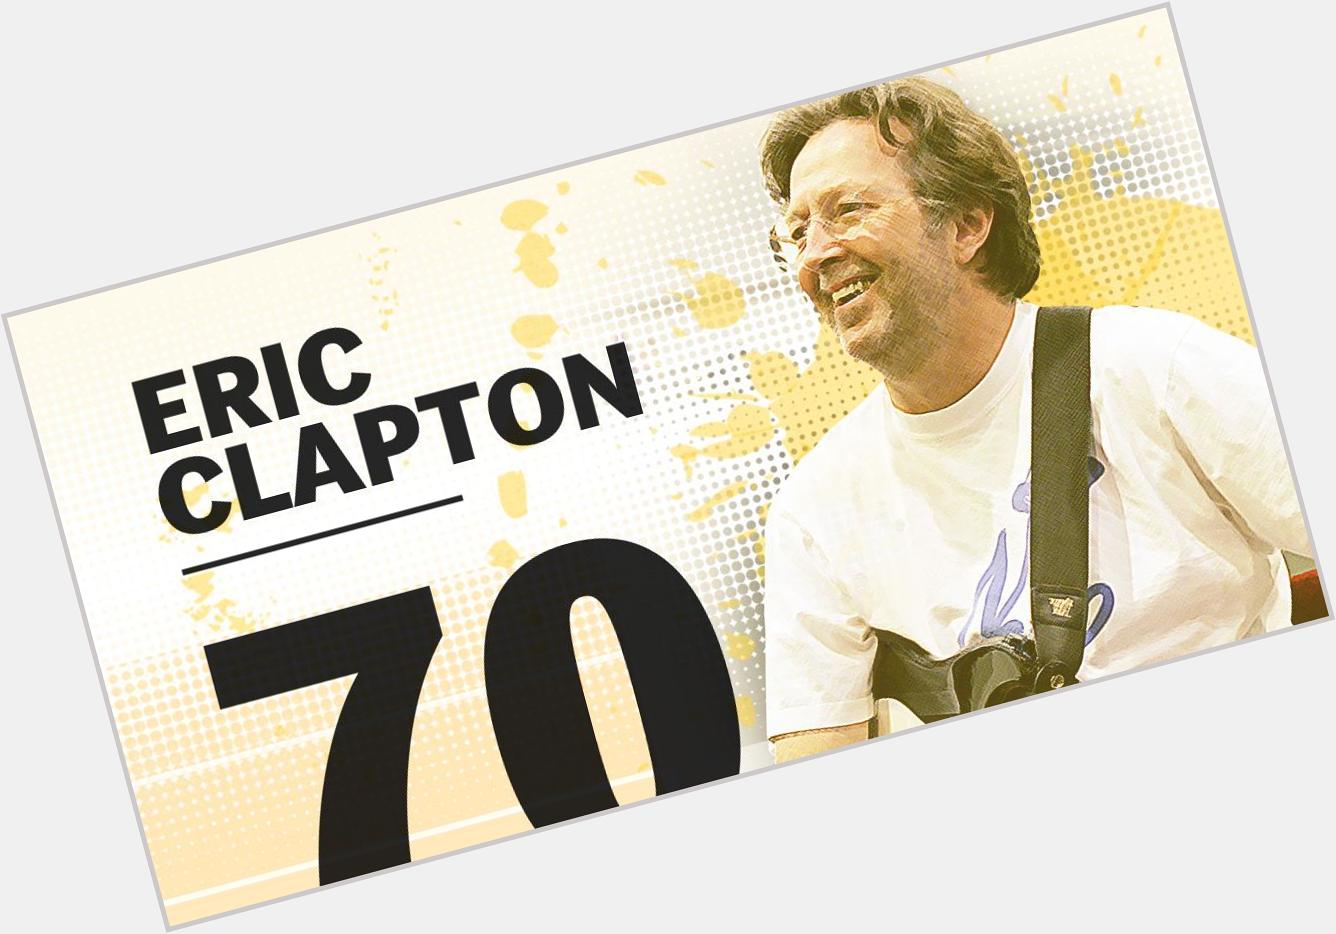 Happy birthday to guitar hero Eric Clapton, who turns 70 today.  